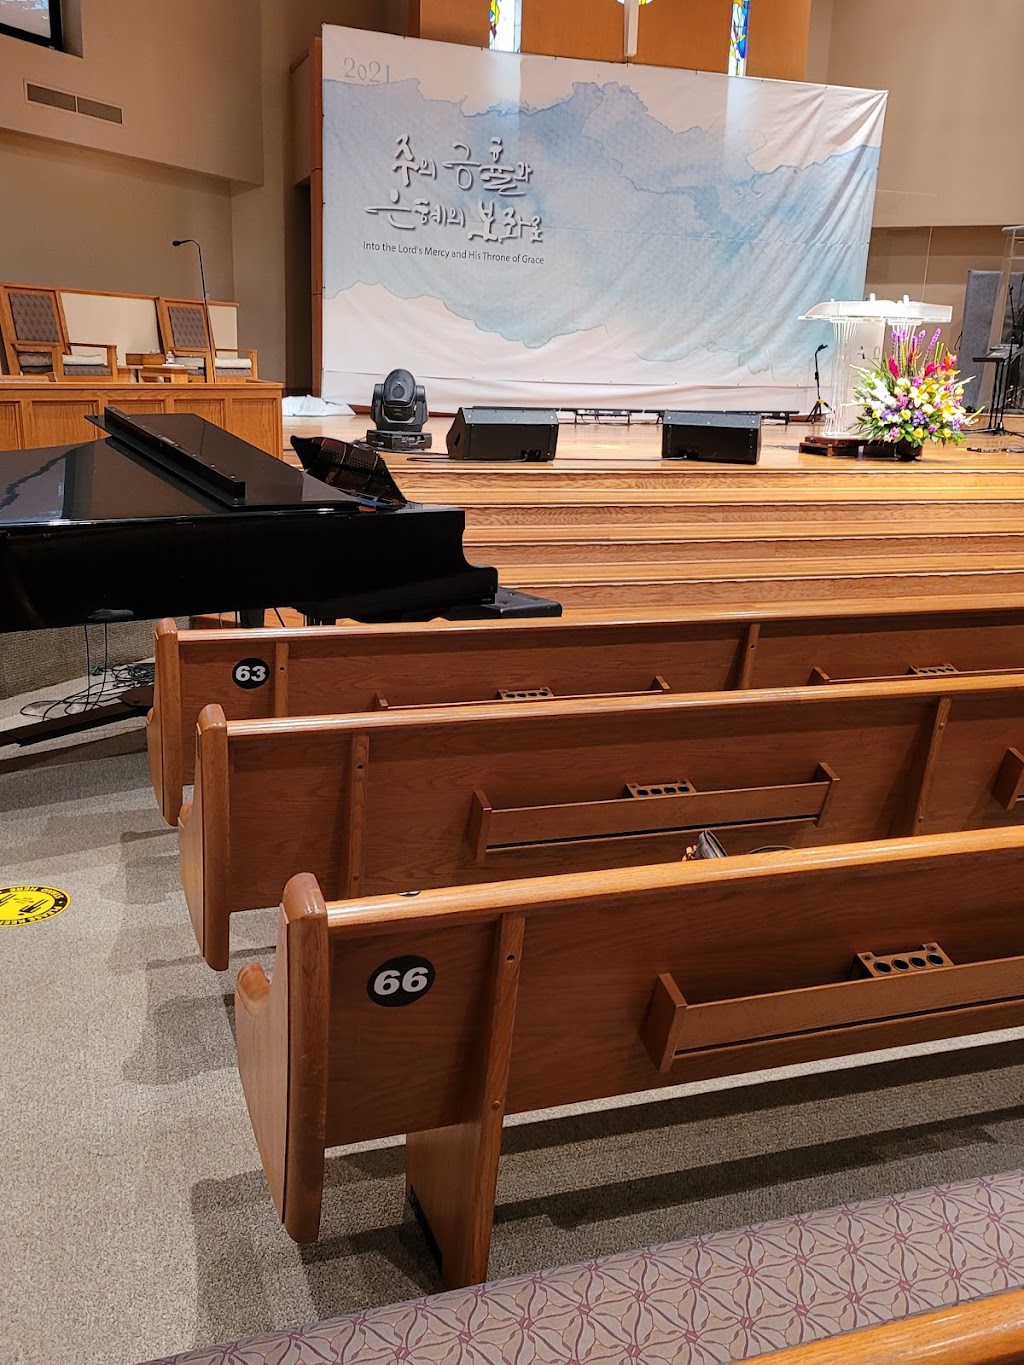 Korean Community Presbyterian Church of Atlanta | 2534 Duluth Hwy, Duluth, GA 30097, USA | Phone: (770) 939-4673